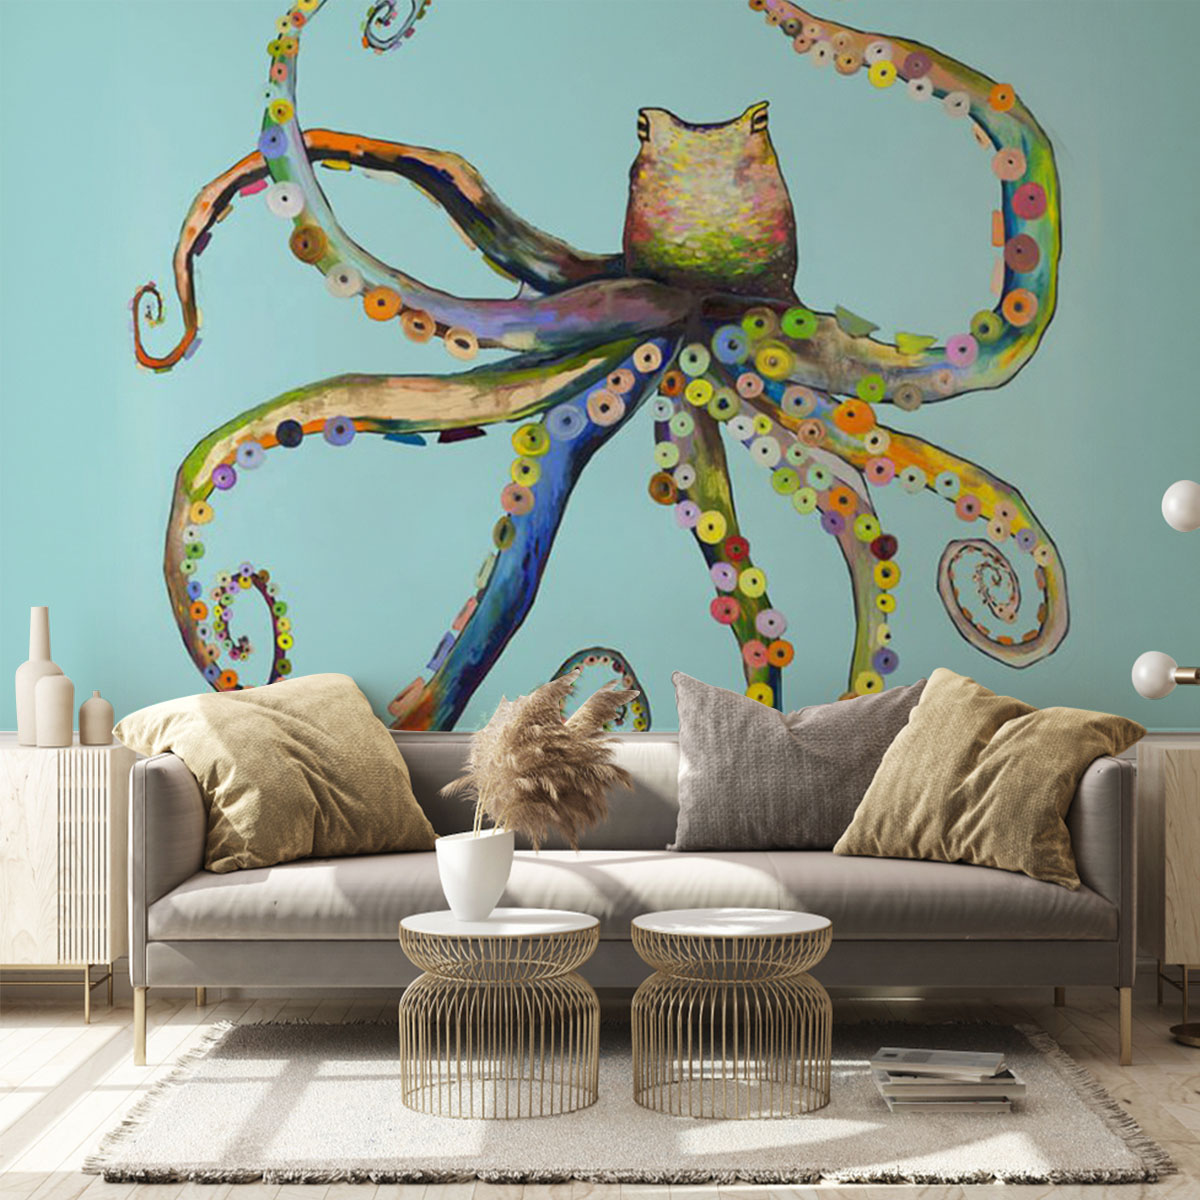 Bright Octopus Wall Mural